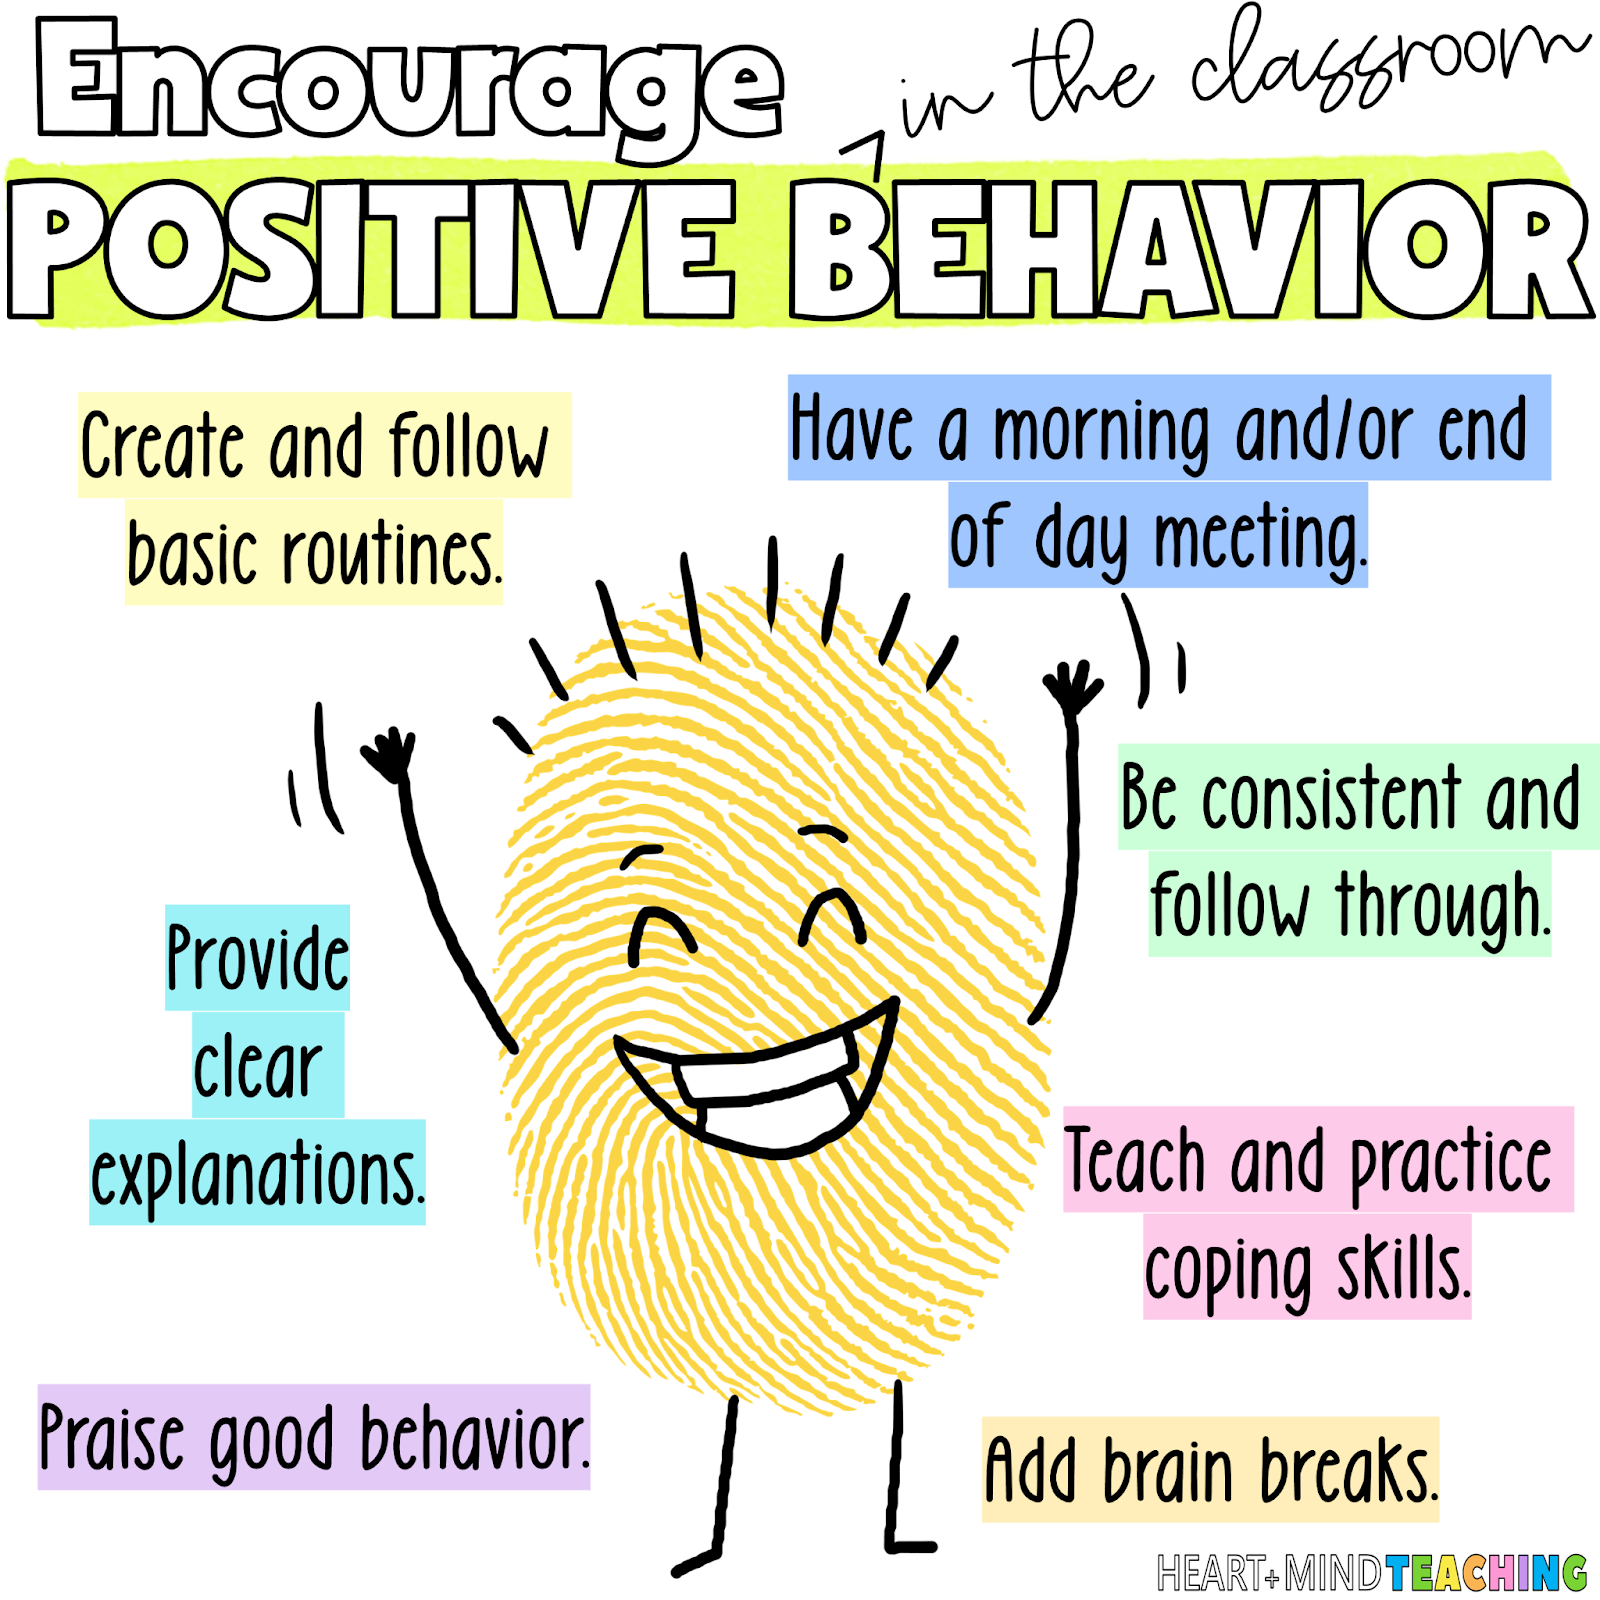 positive-behavior-in-the-classroom